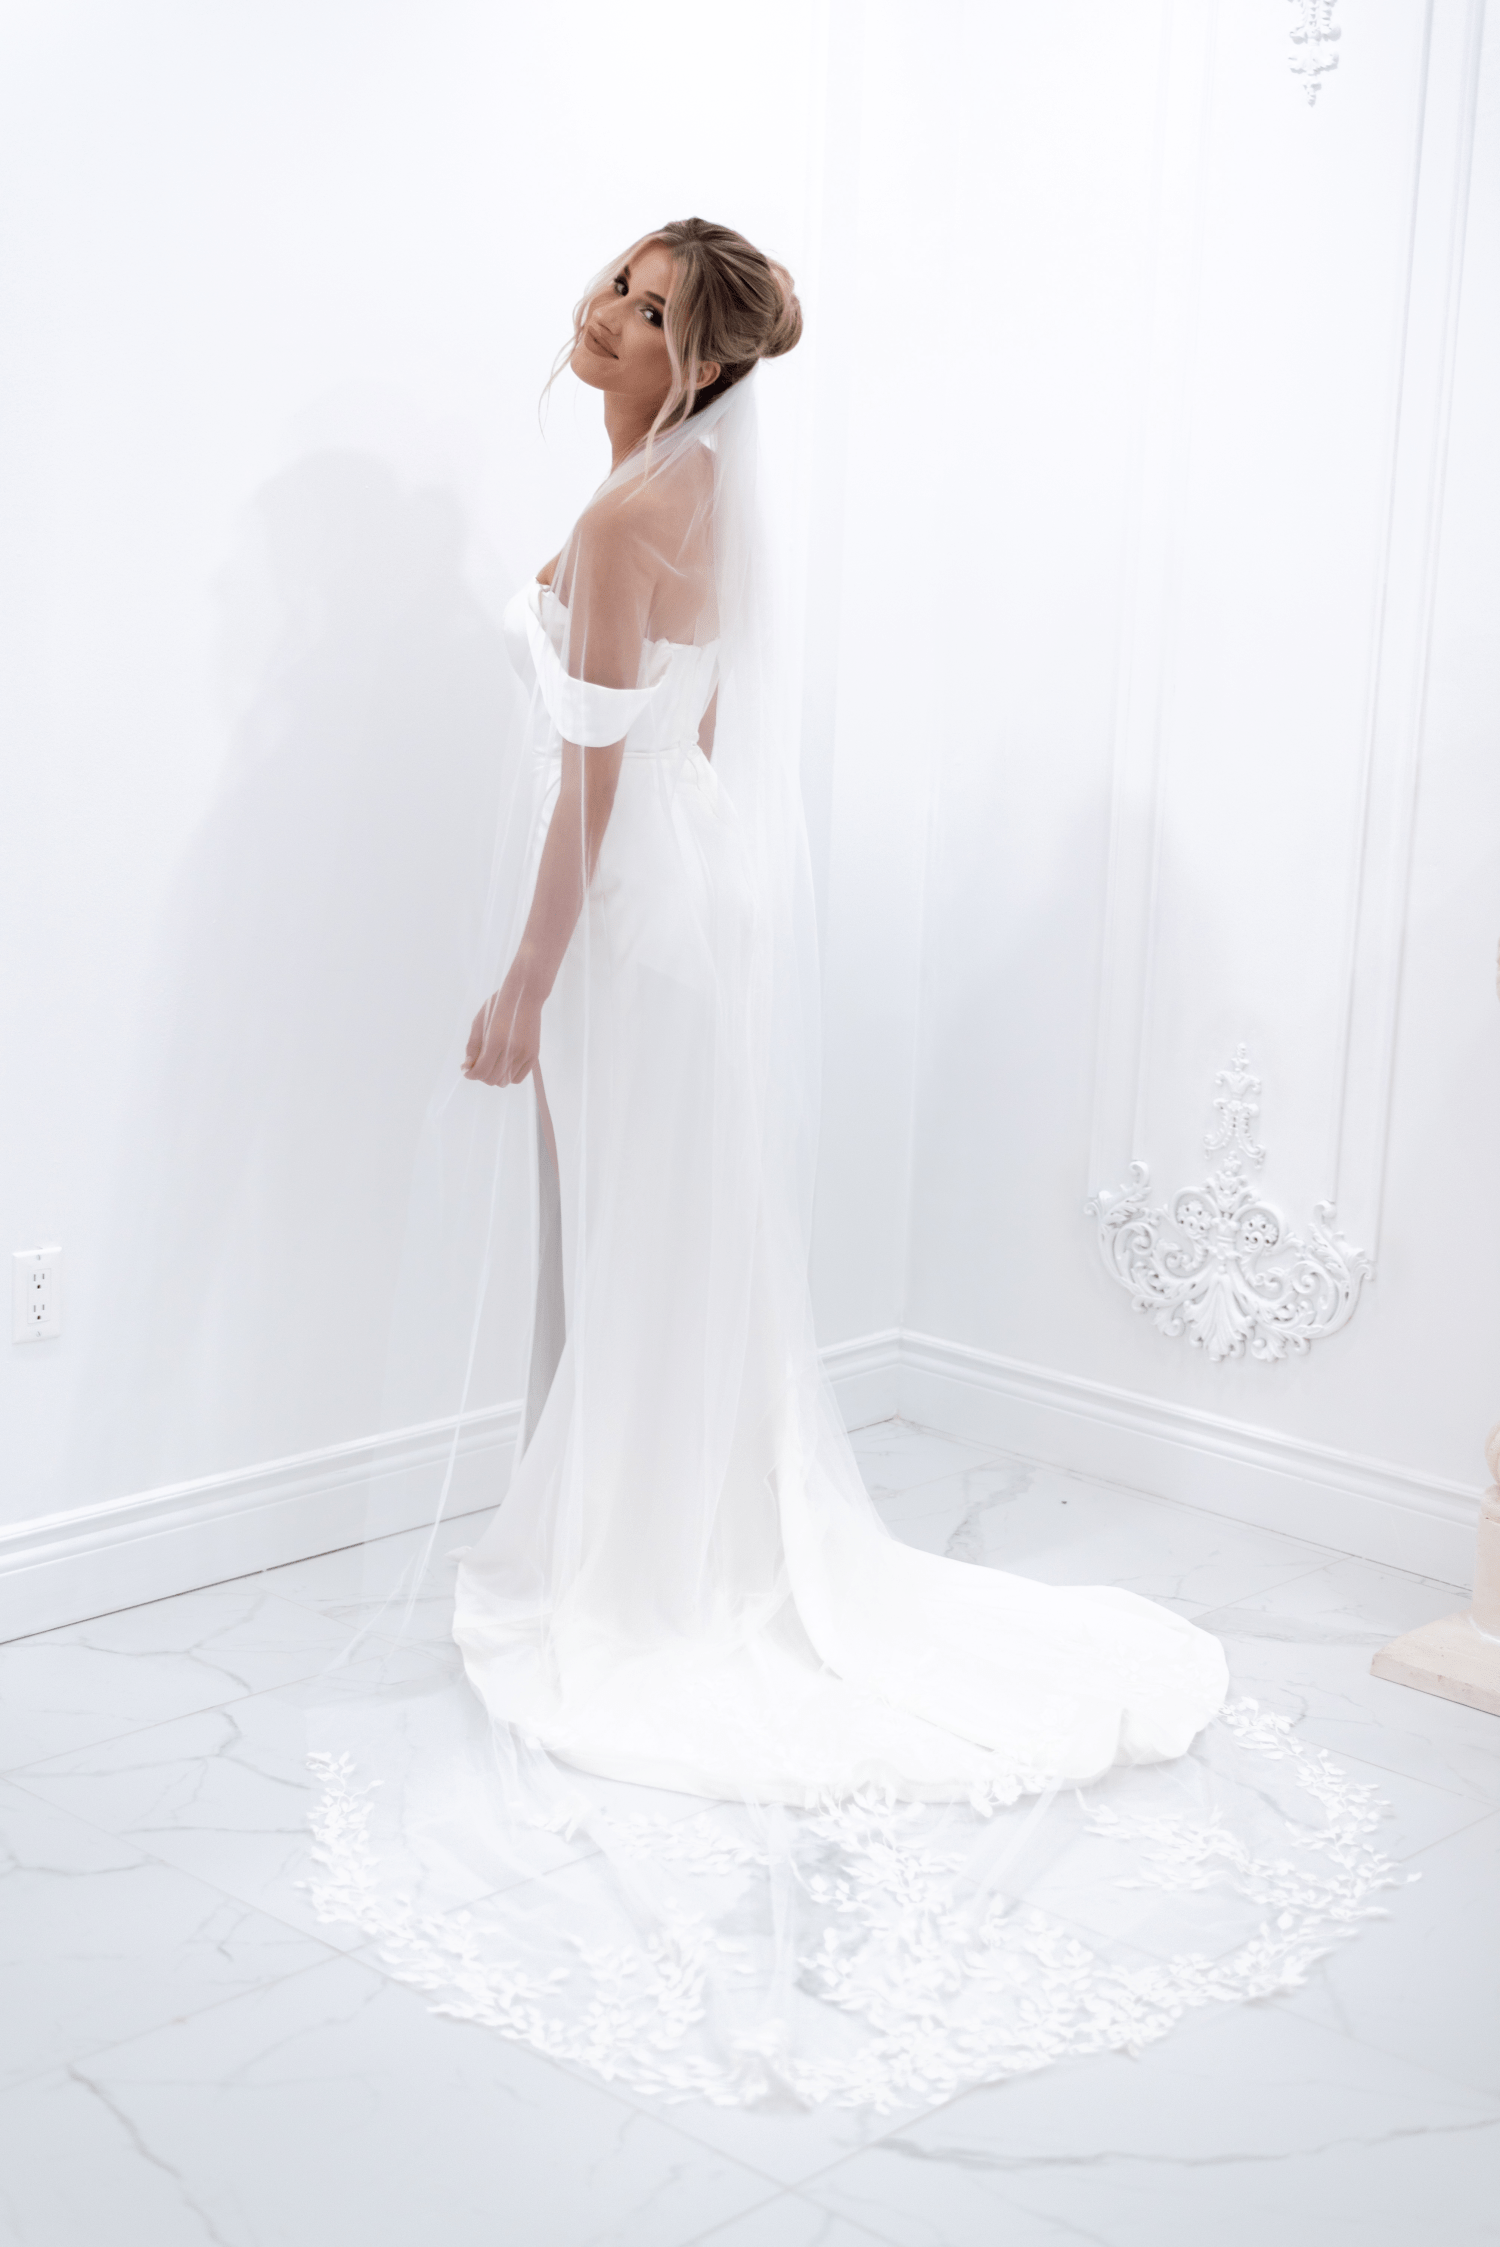 Chic Bridals Bridal Veils Ivory / 3x3.5 "Royal" Danielle Veil Wedding Gowns